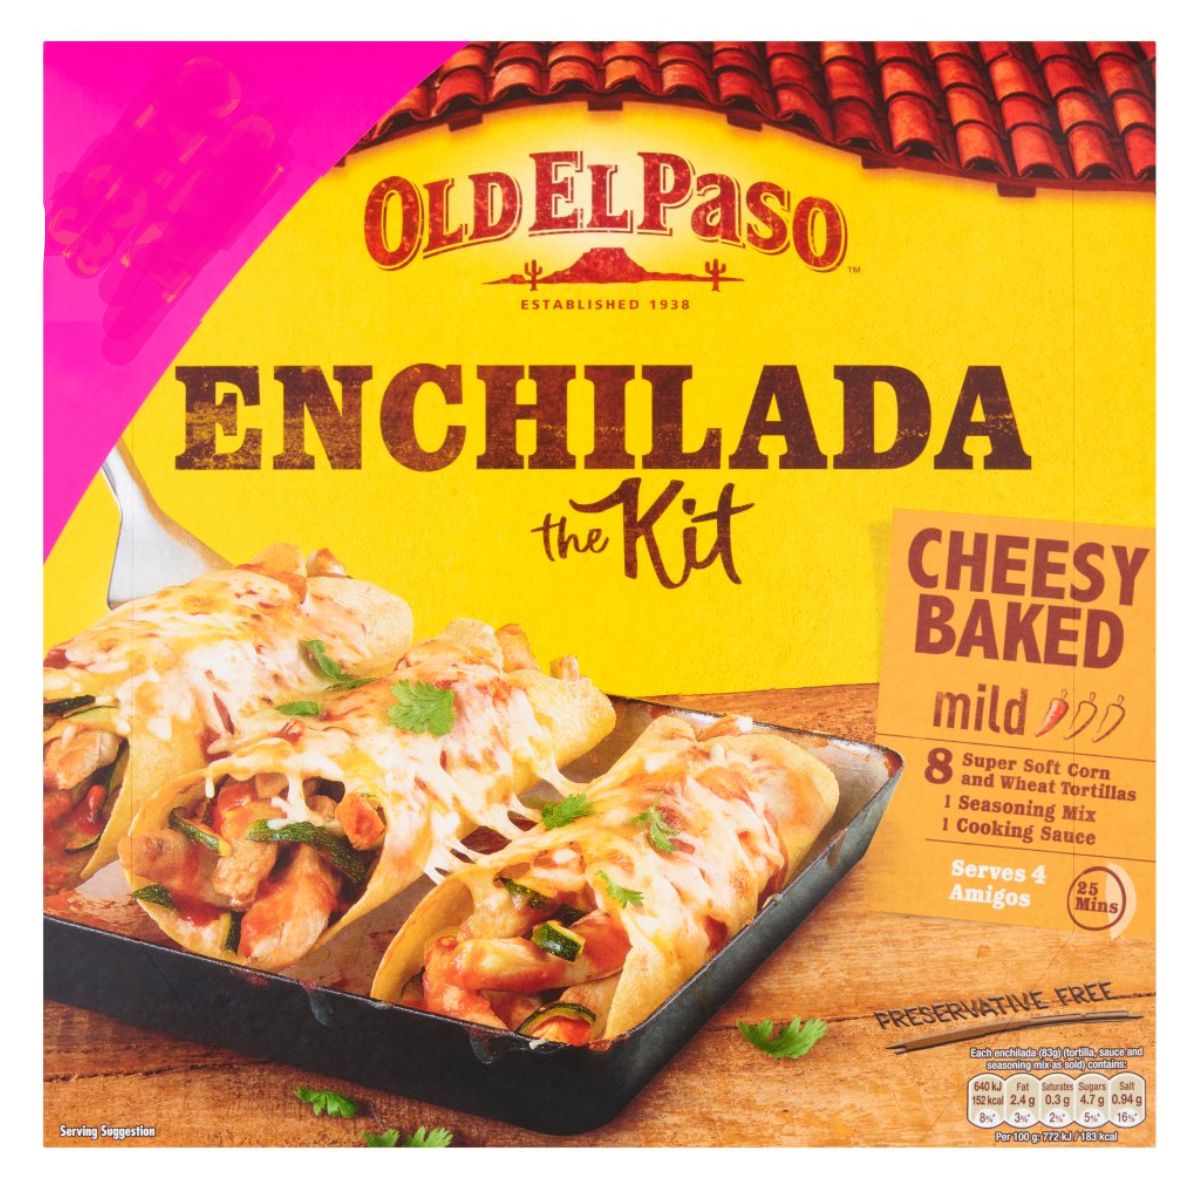 Old El Paso - Enchilada the Kit Cheesy Baked - 663g